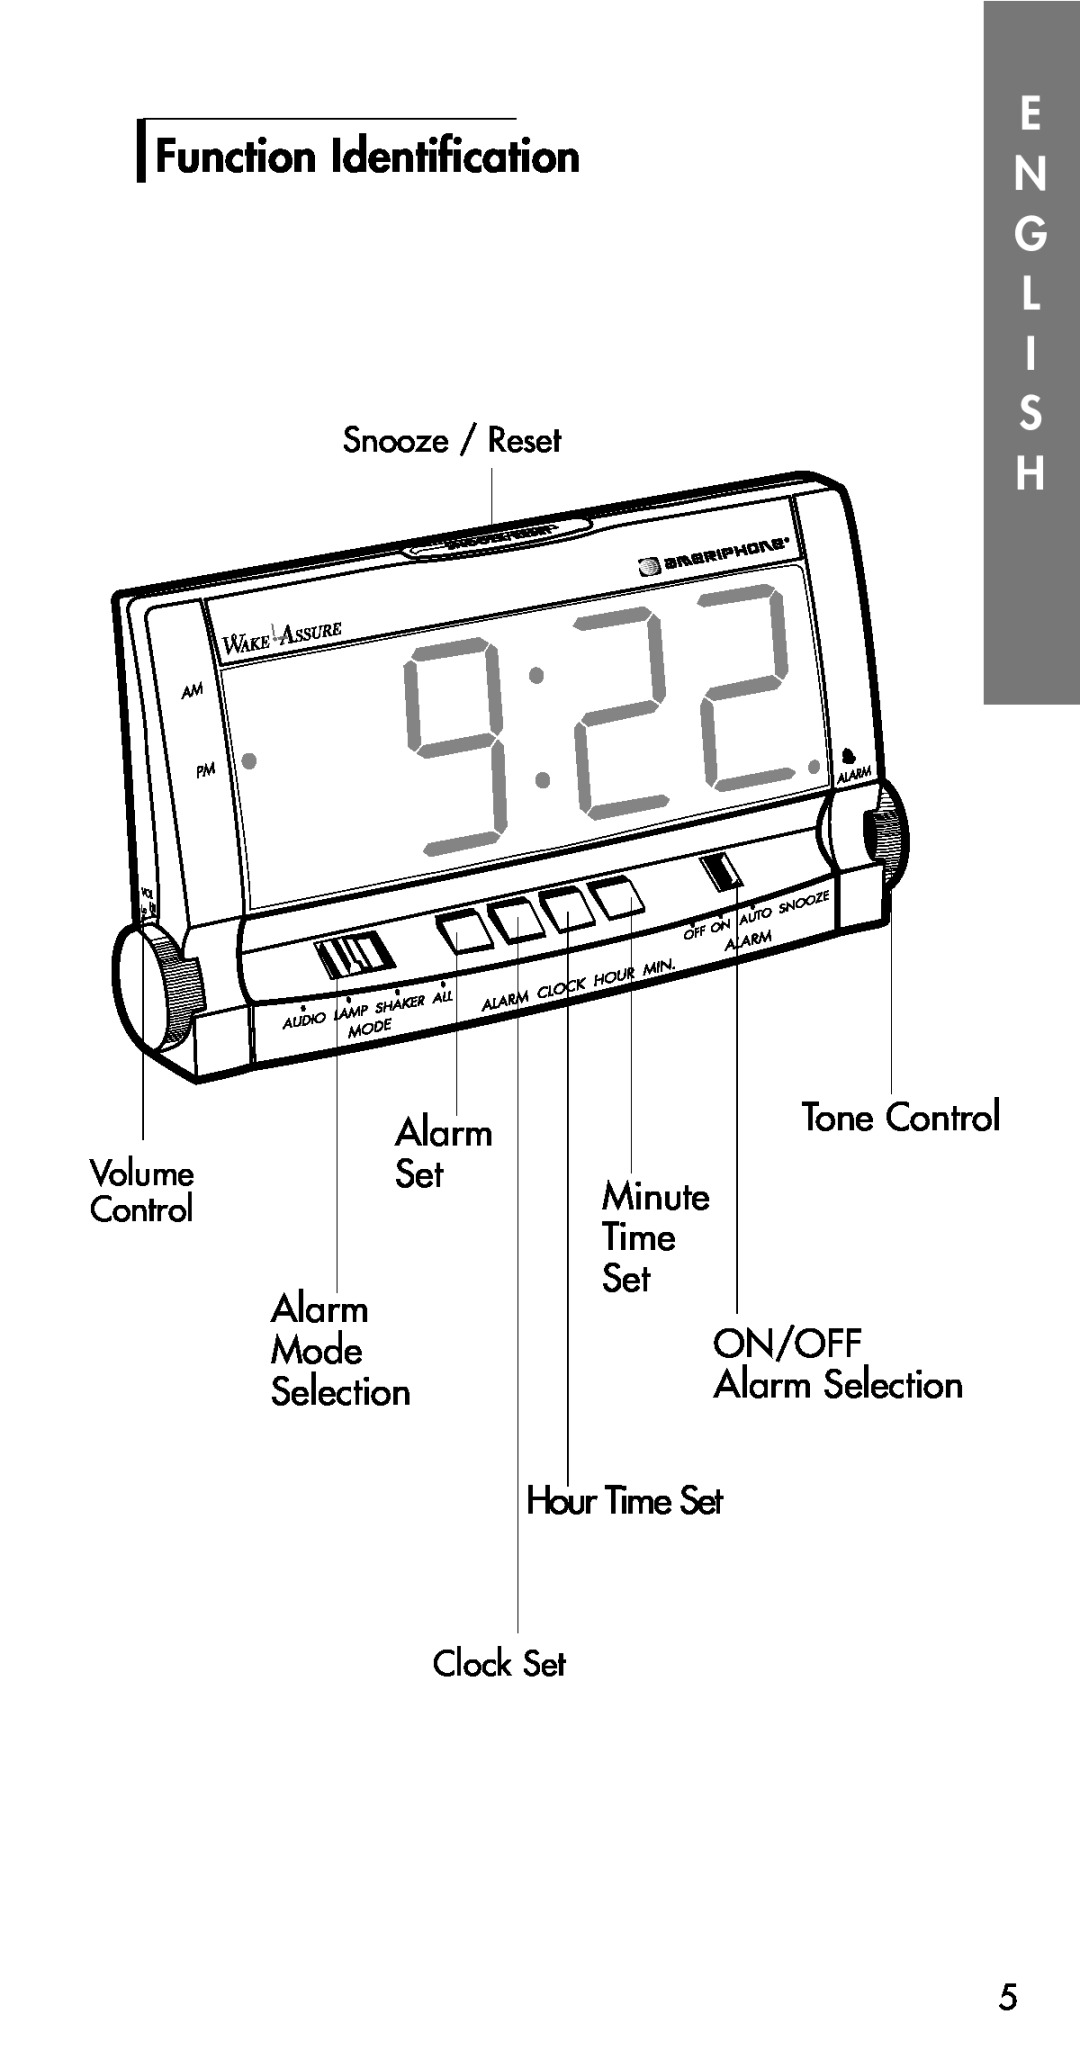 Plantronics Fire Alarm L I S, Mode, Tone Control Minute Time Set ON/OFF, Alarm Selection Hour Time Set, Snooze / Reset 